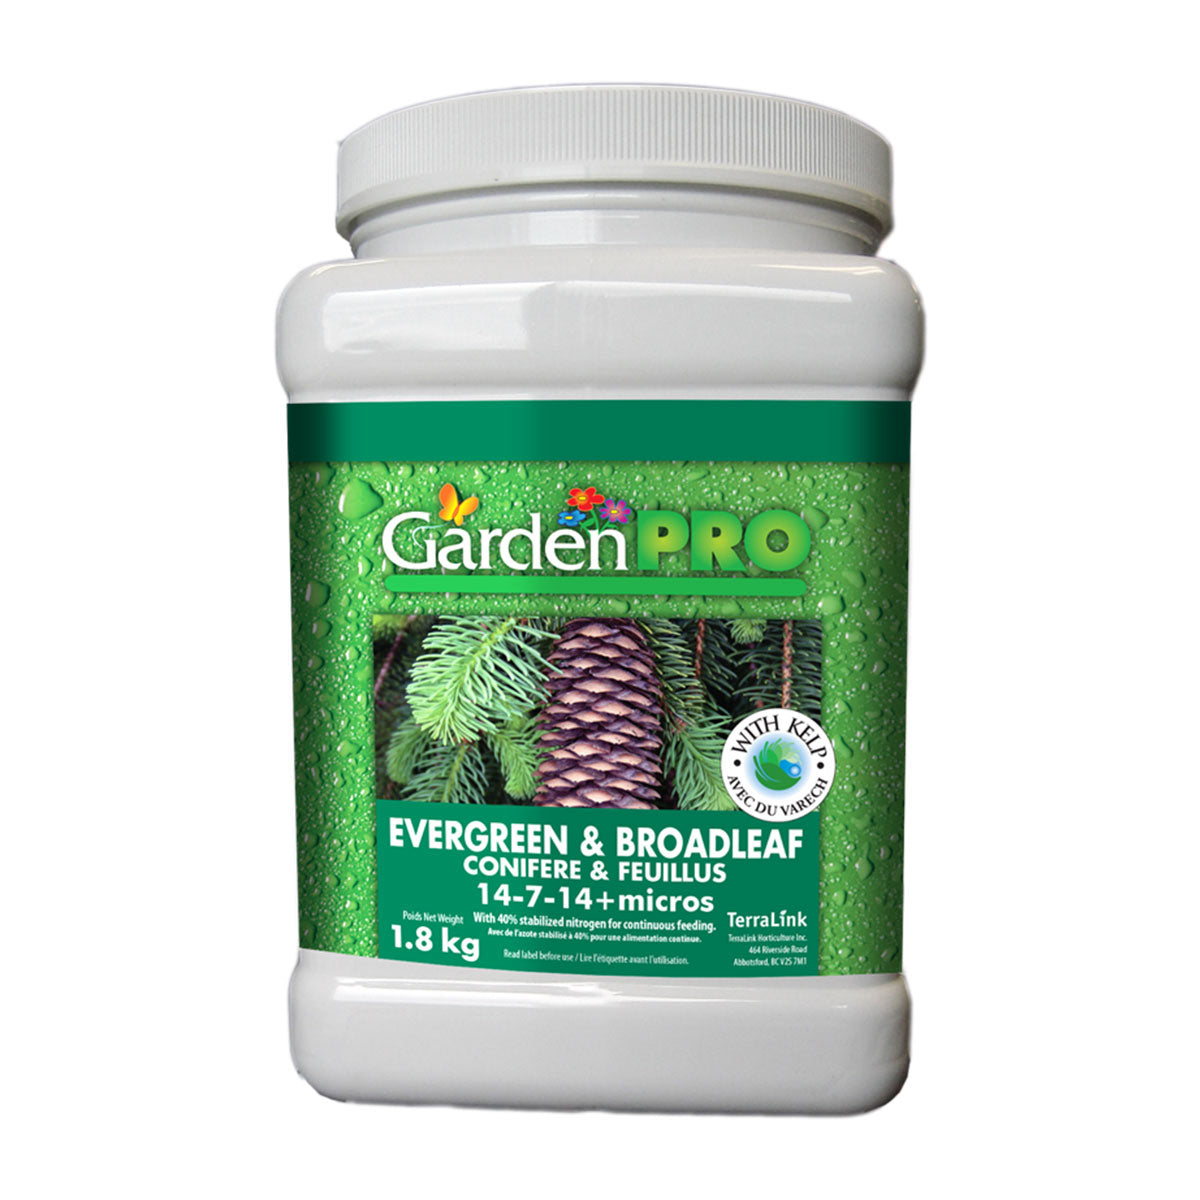 GardenPro Evergreen & Broadleaf 14-7-14 + Micros - 1.8kg